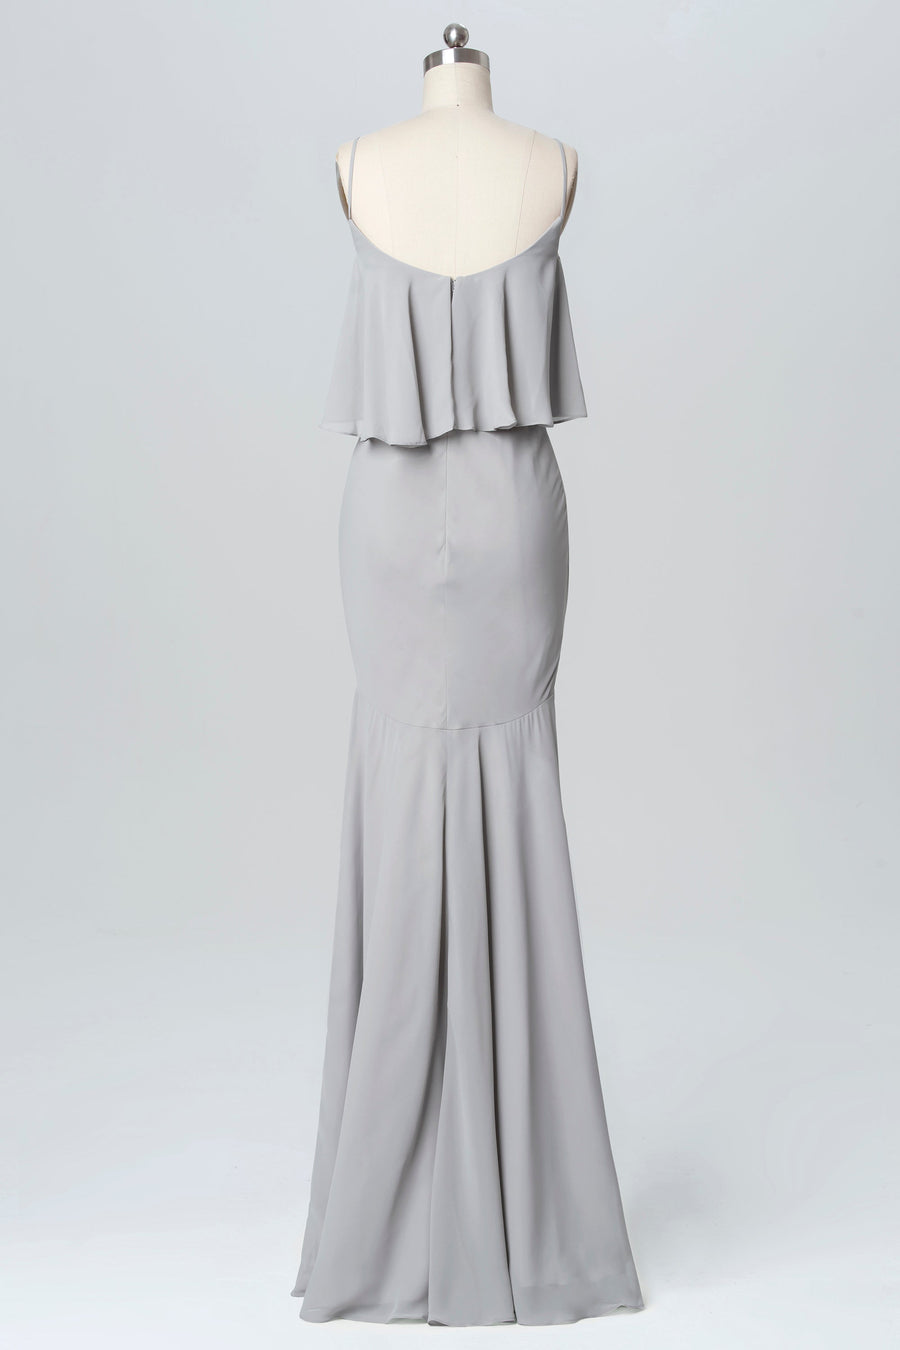 Lace Boat Neck Sleeveless Bridesmaid Dress| Plus Size | 60+ Colors